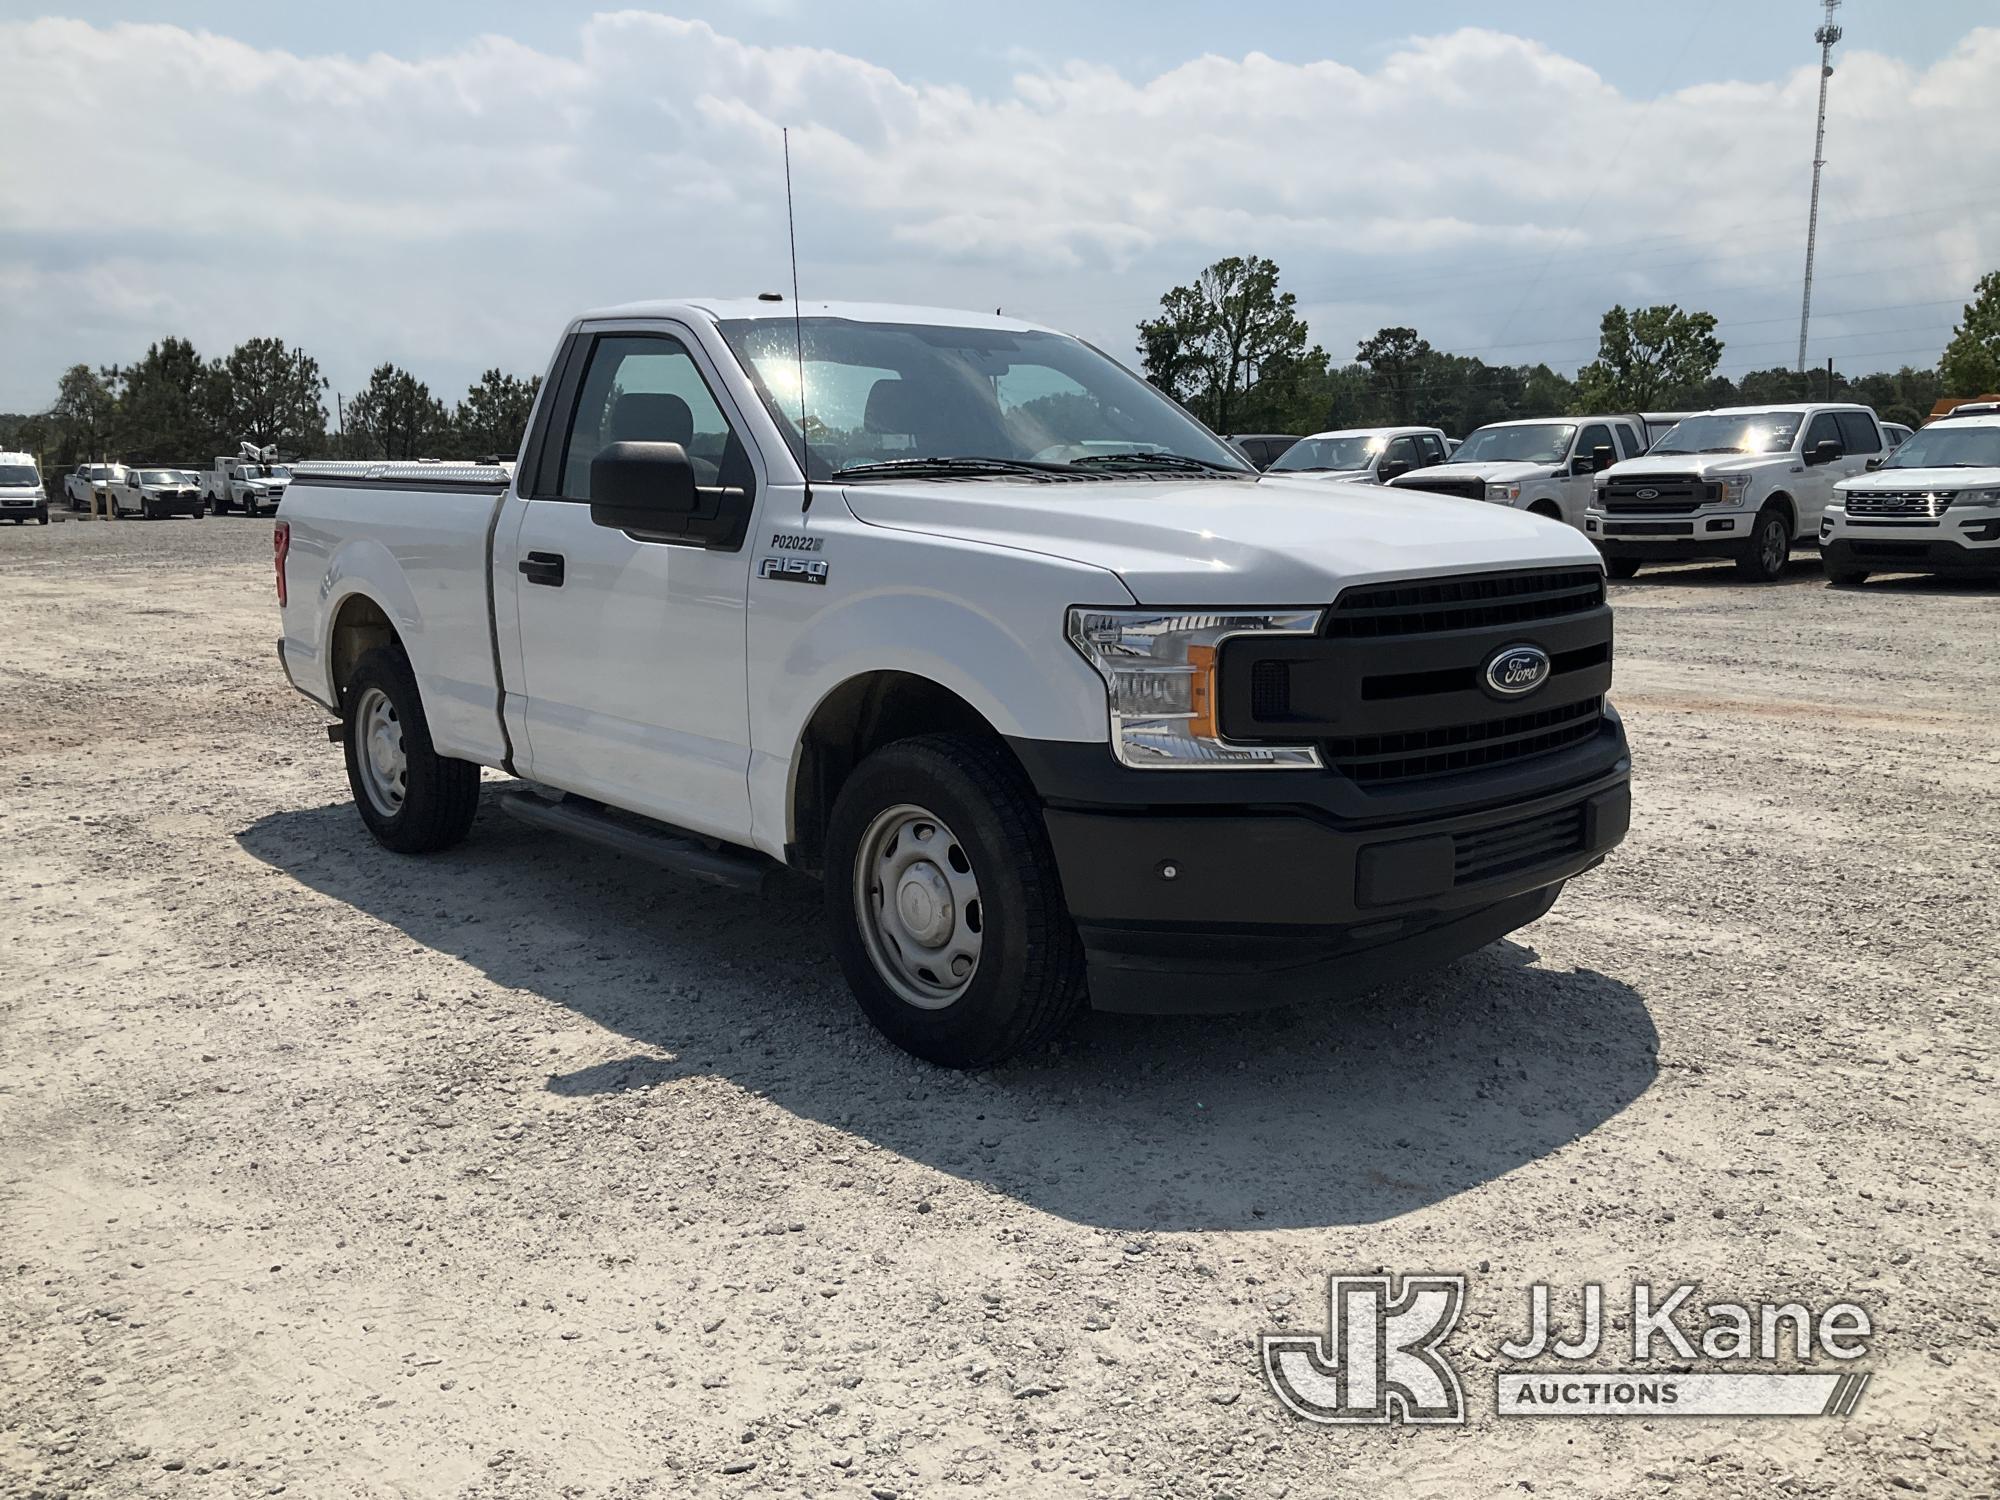 (Villa Rica, GA) 2018 Ford F150 Pickup Truck, (GA Power Unit) Runs & Moves